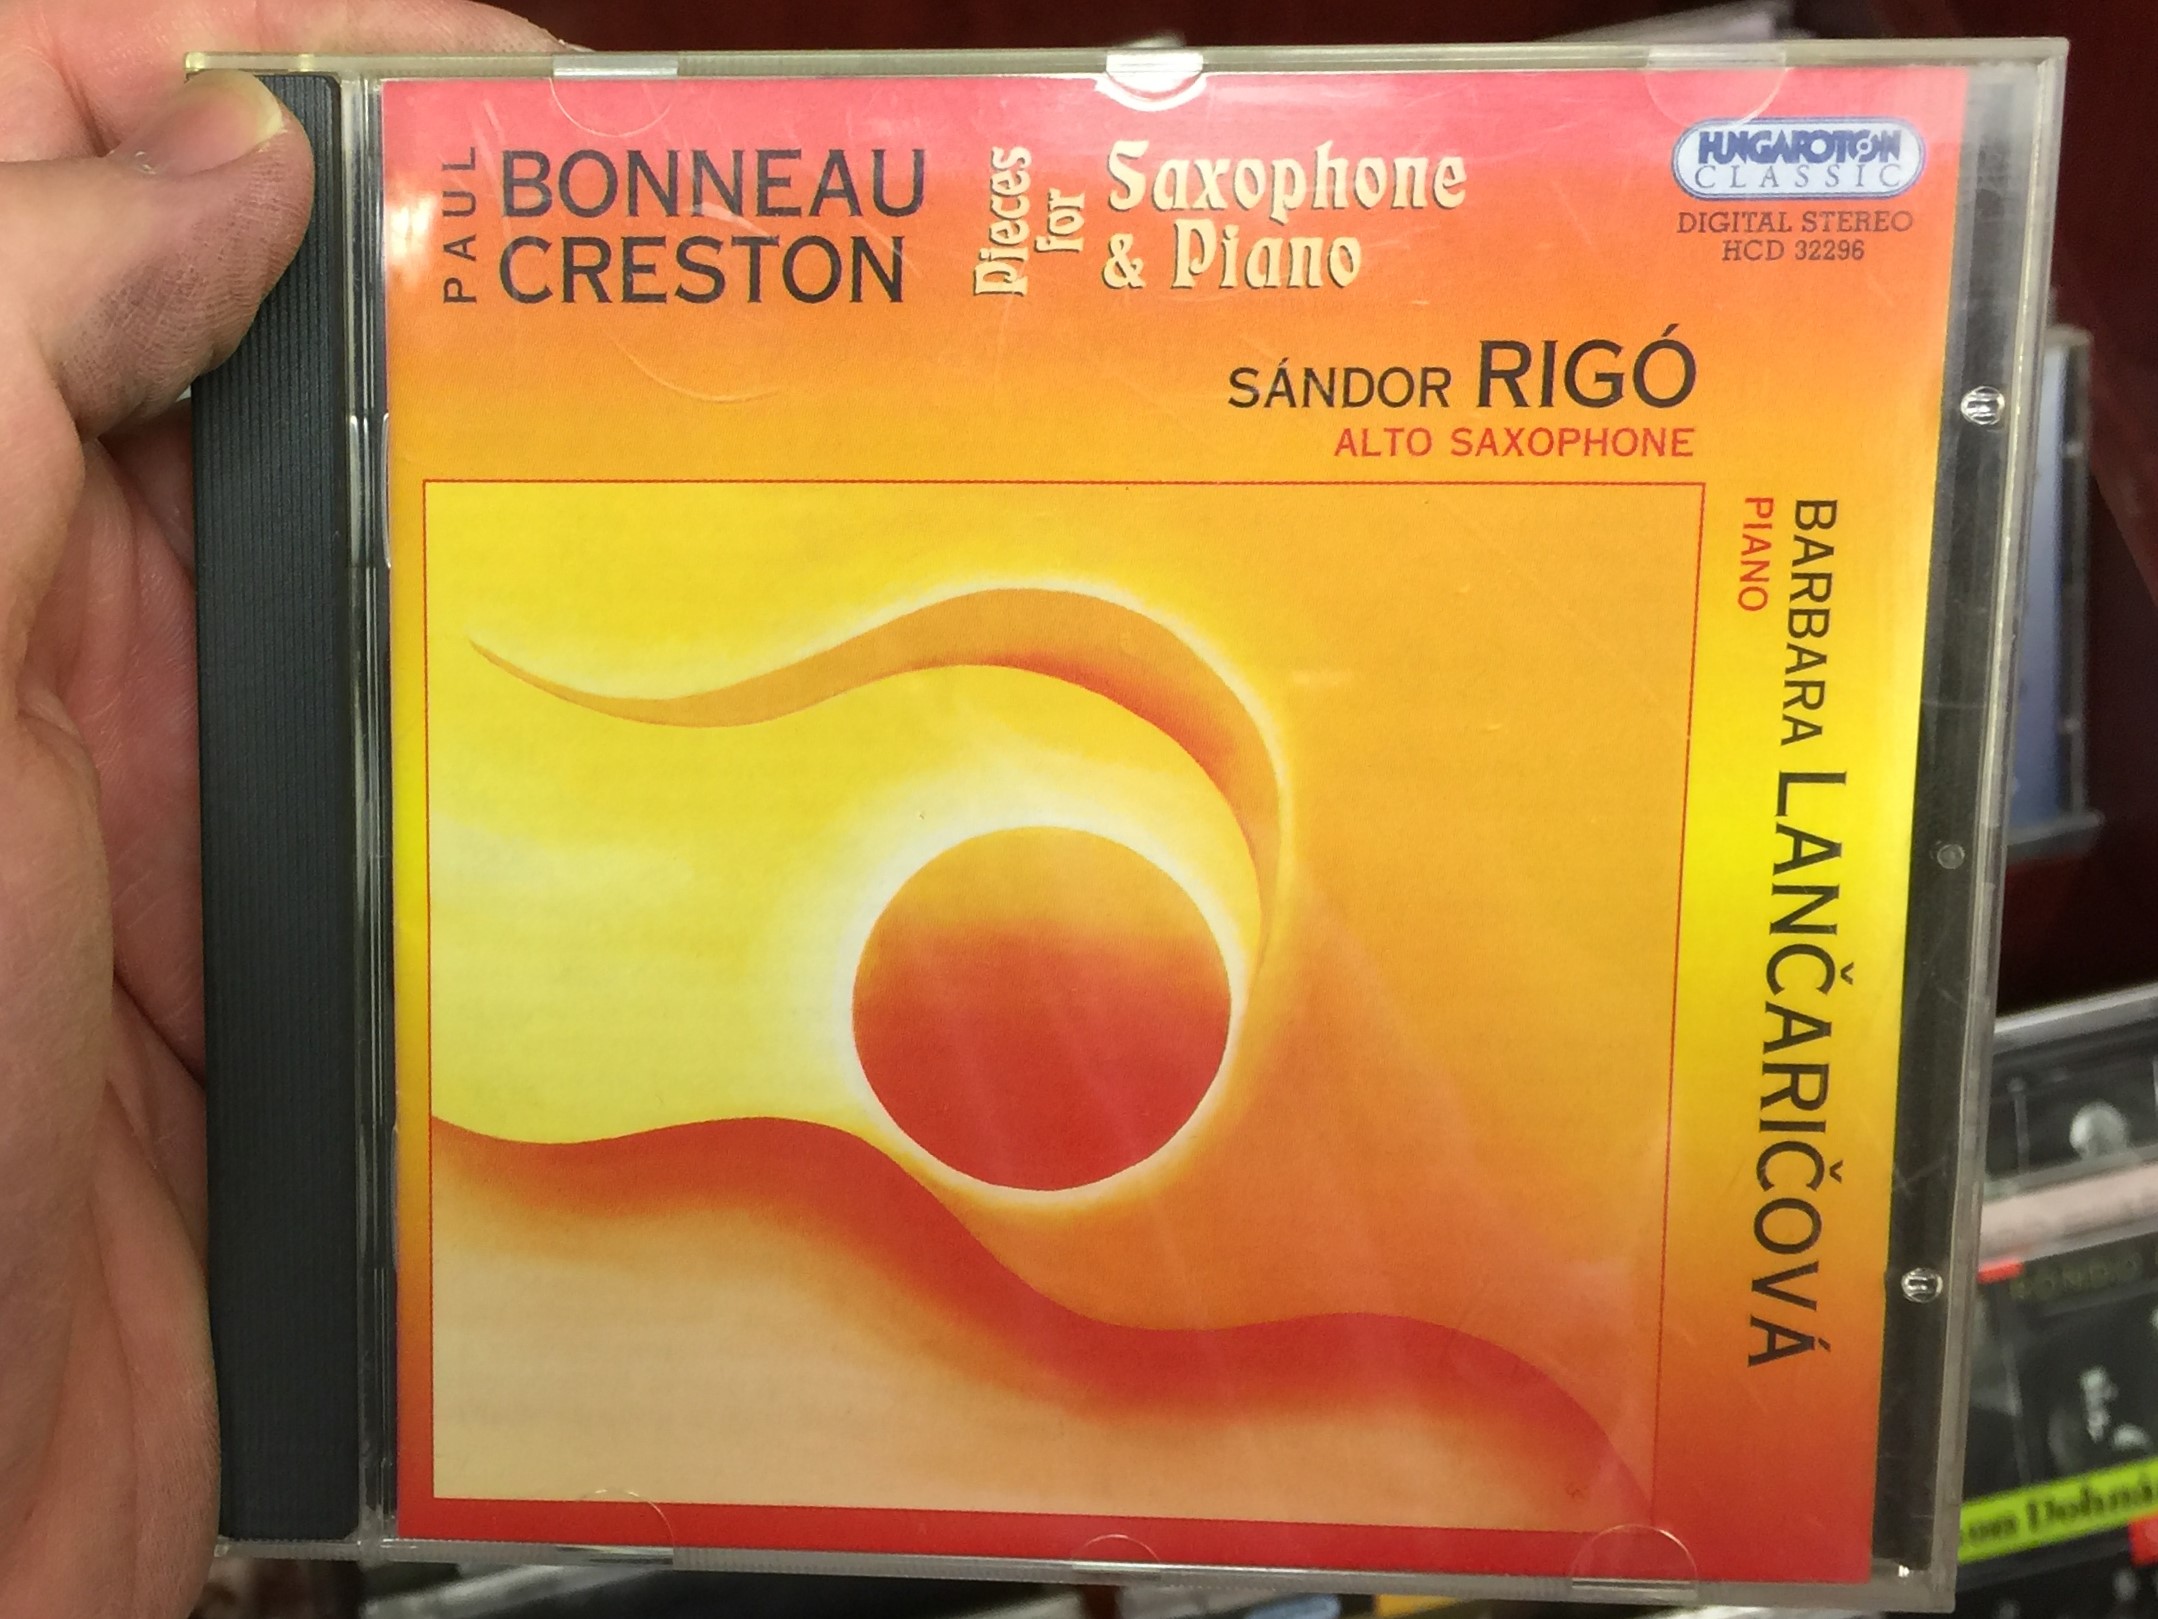 paul-bonneau-paul-creston-pieces-for-saxophone-piano-sandor-rigo-alto-saxophone-barbara-lan-ari-ova-piano-hungaroton-classic-audio-cd-2005-stereo-hcd-32296-1-.jpg